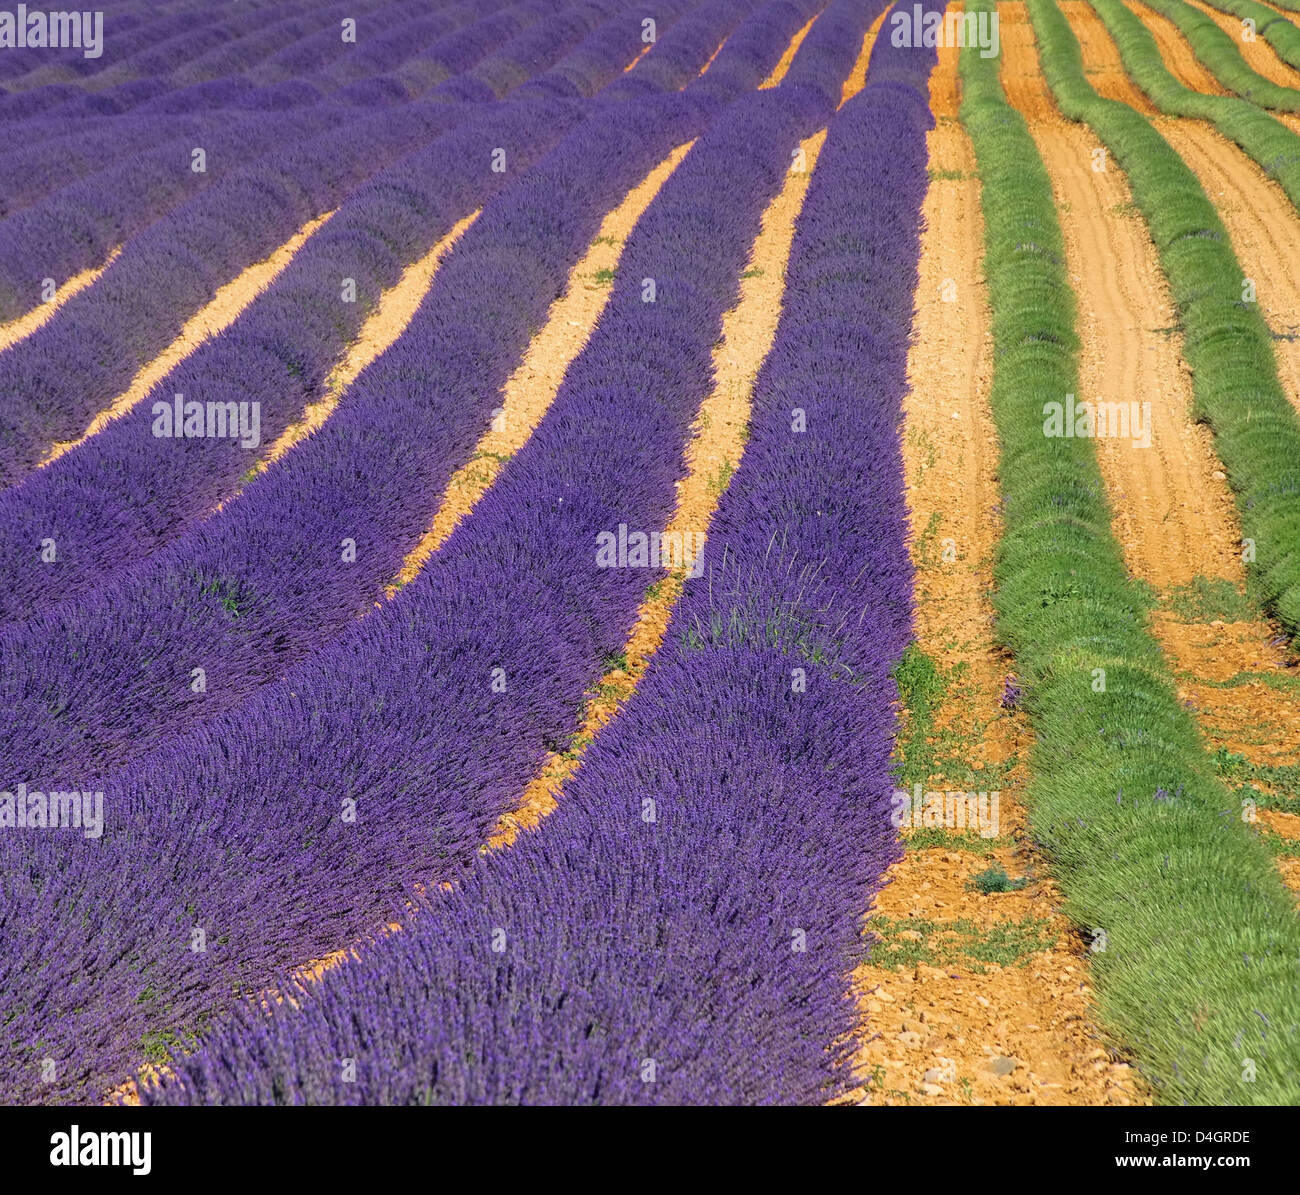 Lavendelfeld Ernte - lavender field harvest 02 Stock Photo